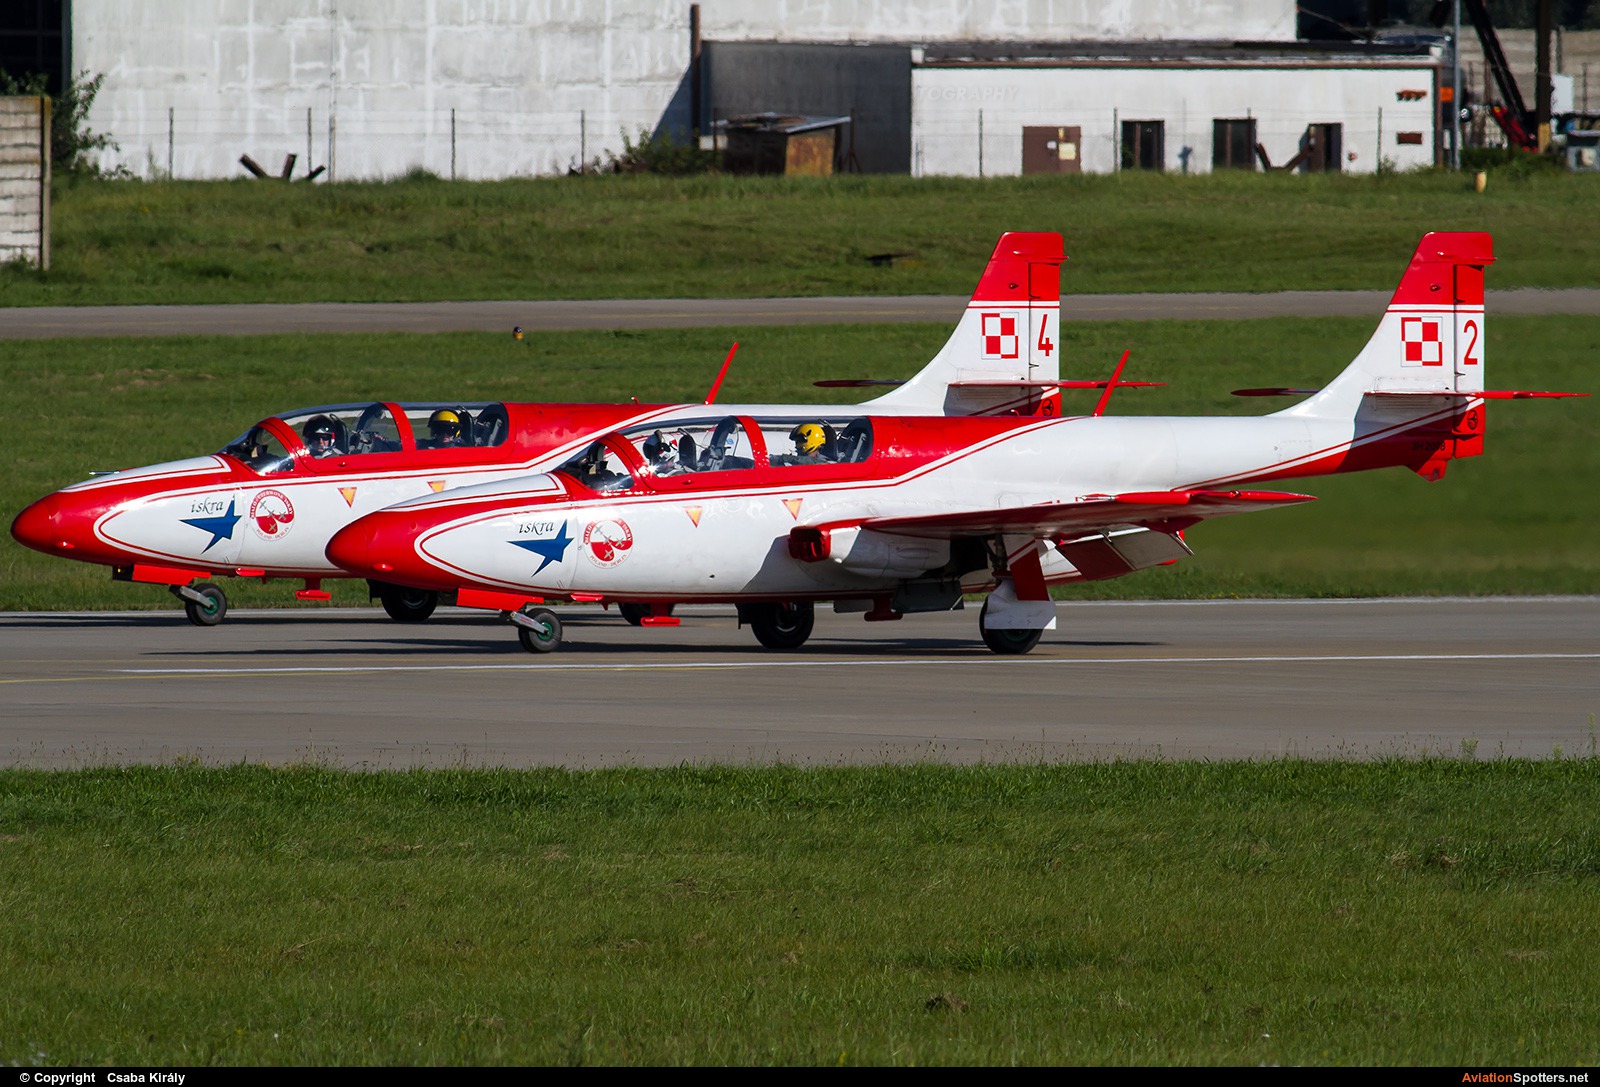 Poland - Air Force: White & Red Iskras  -  TS-11 Iskra  (3H-2008) By Csaba Király (Csaba Kiraly)